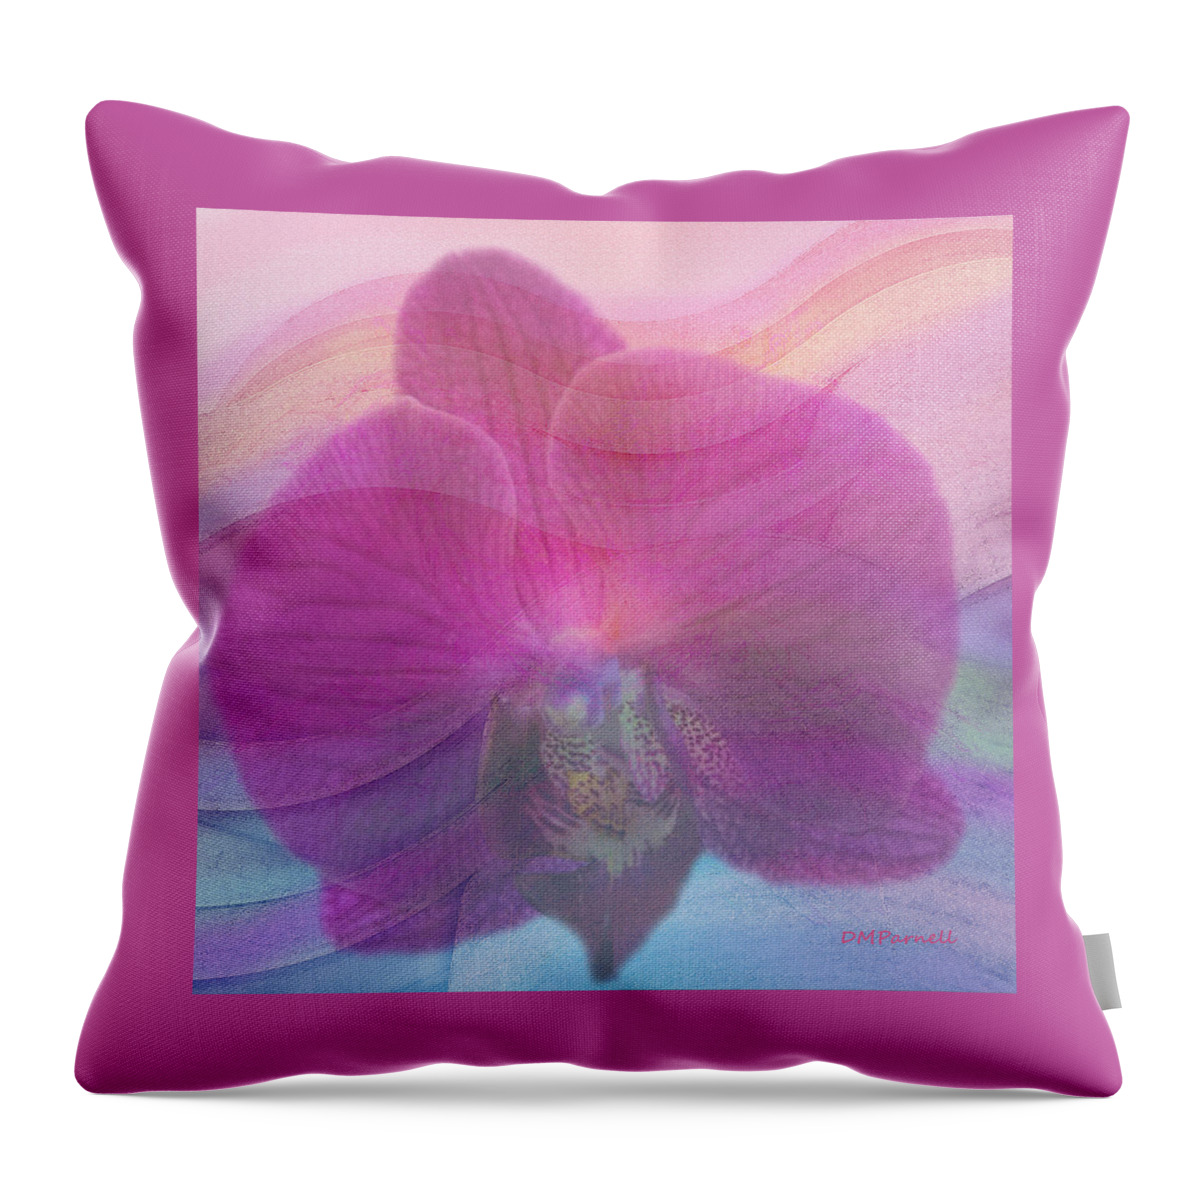 Iris Throw Pillow featuring the digital art Iris Curves by Diane Parnell